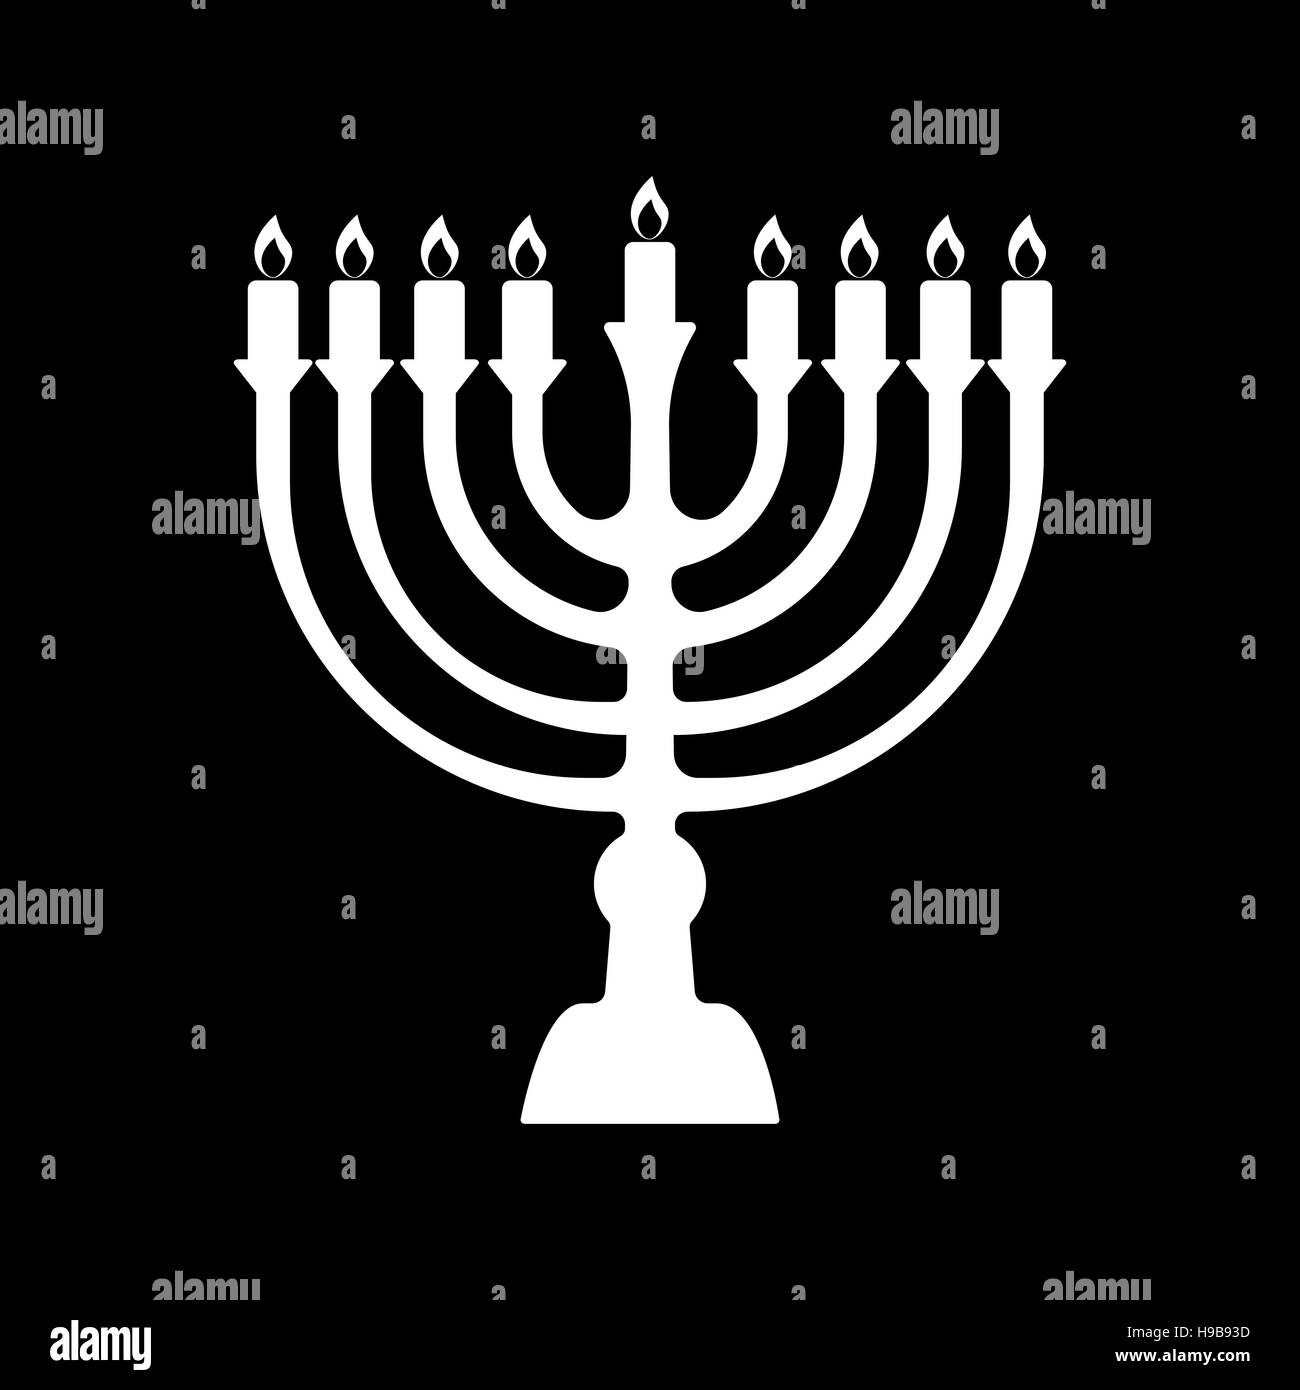 Menorah symbol of Judaism. Illustration isolated on black background. Stock Vector